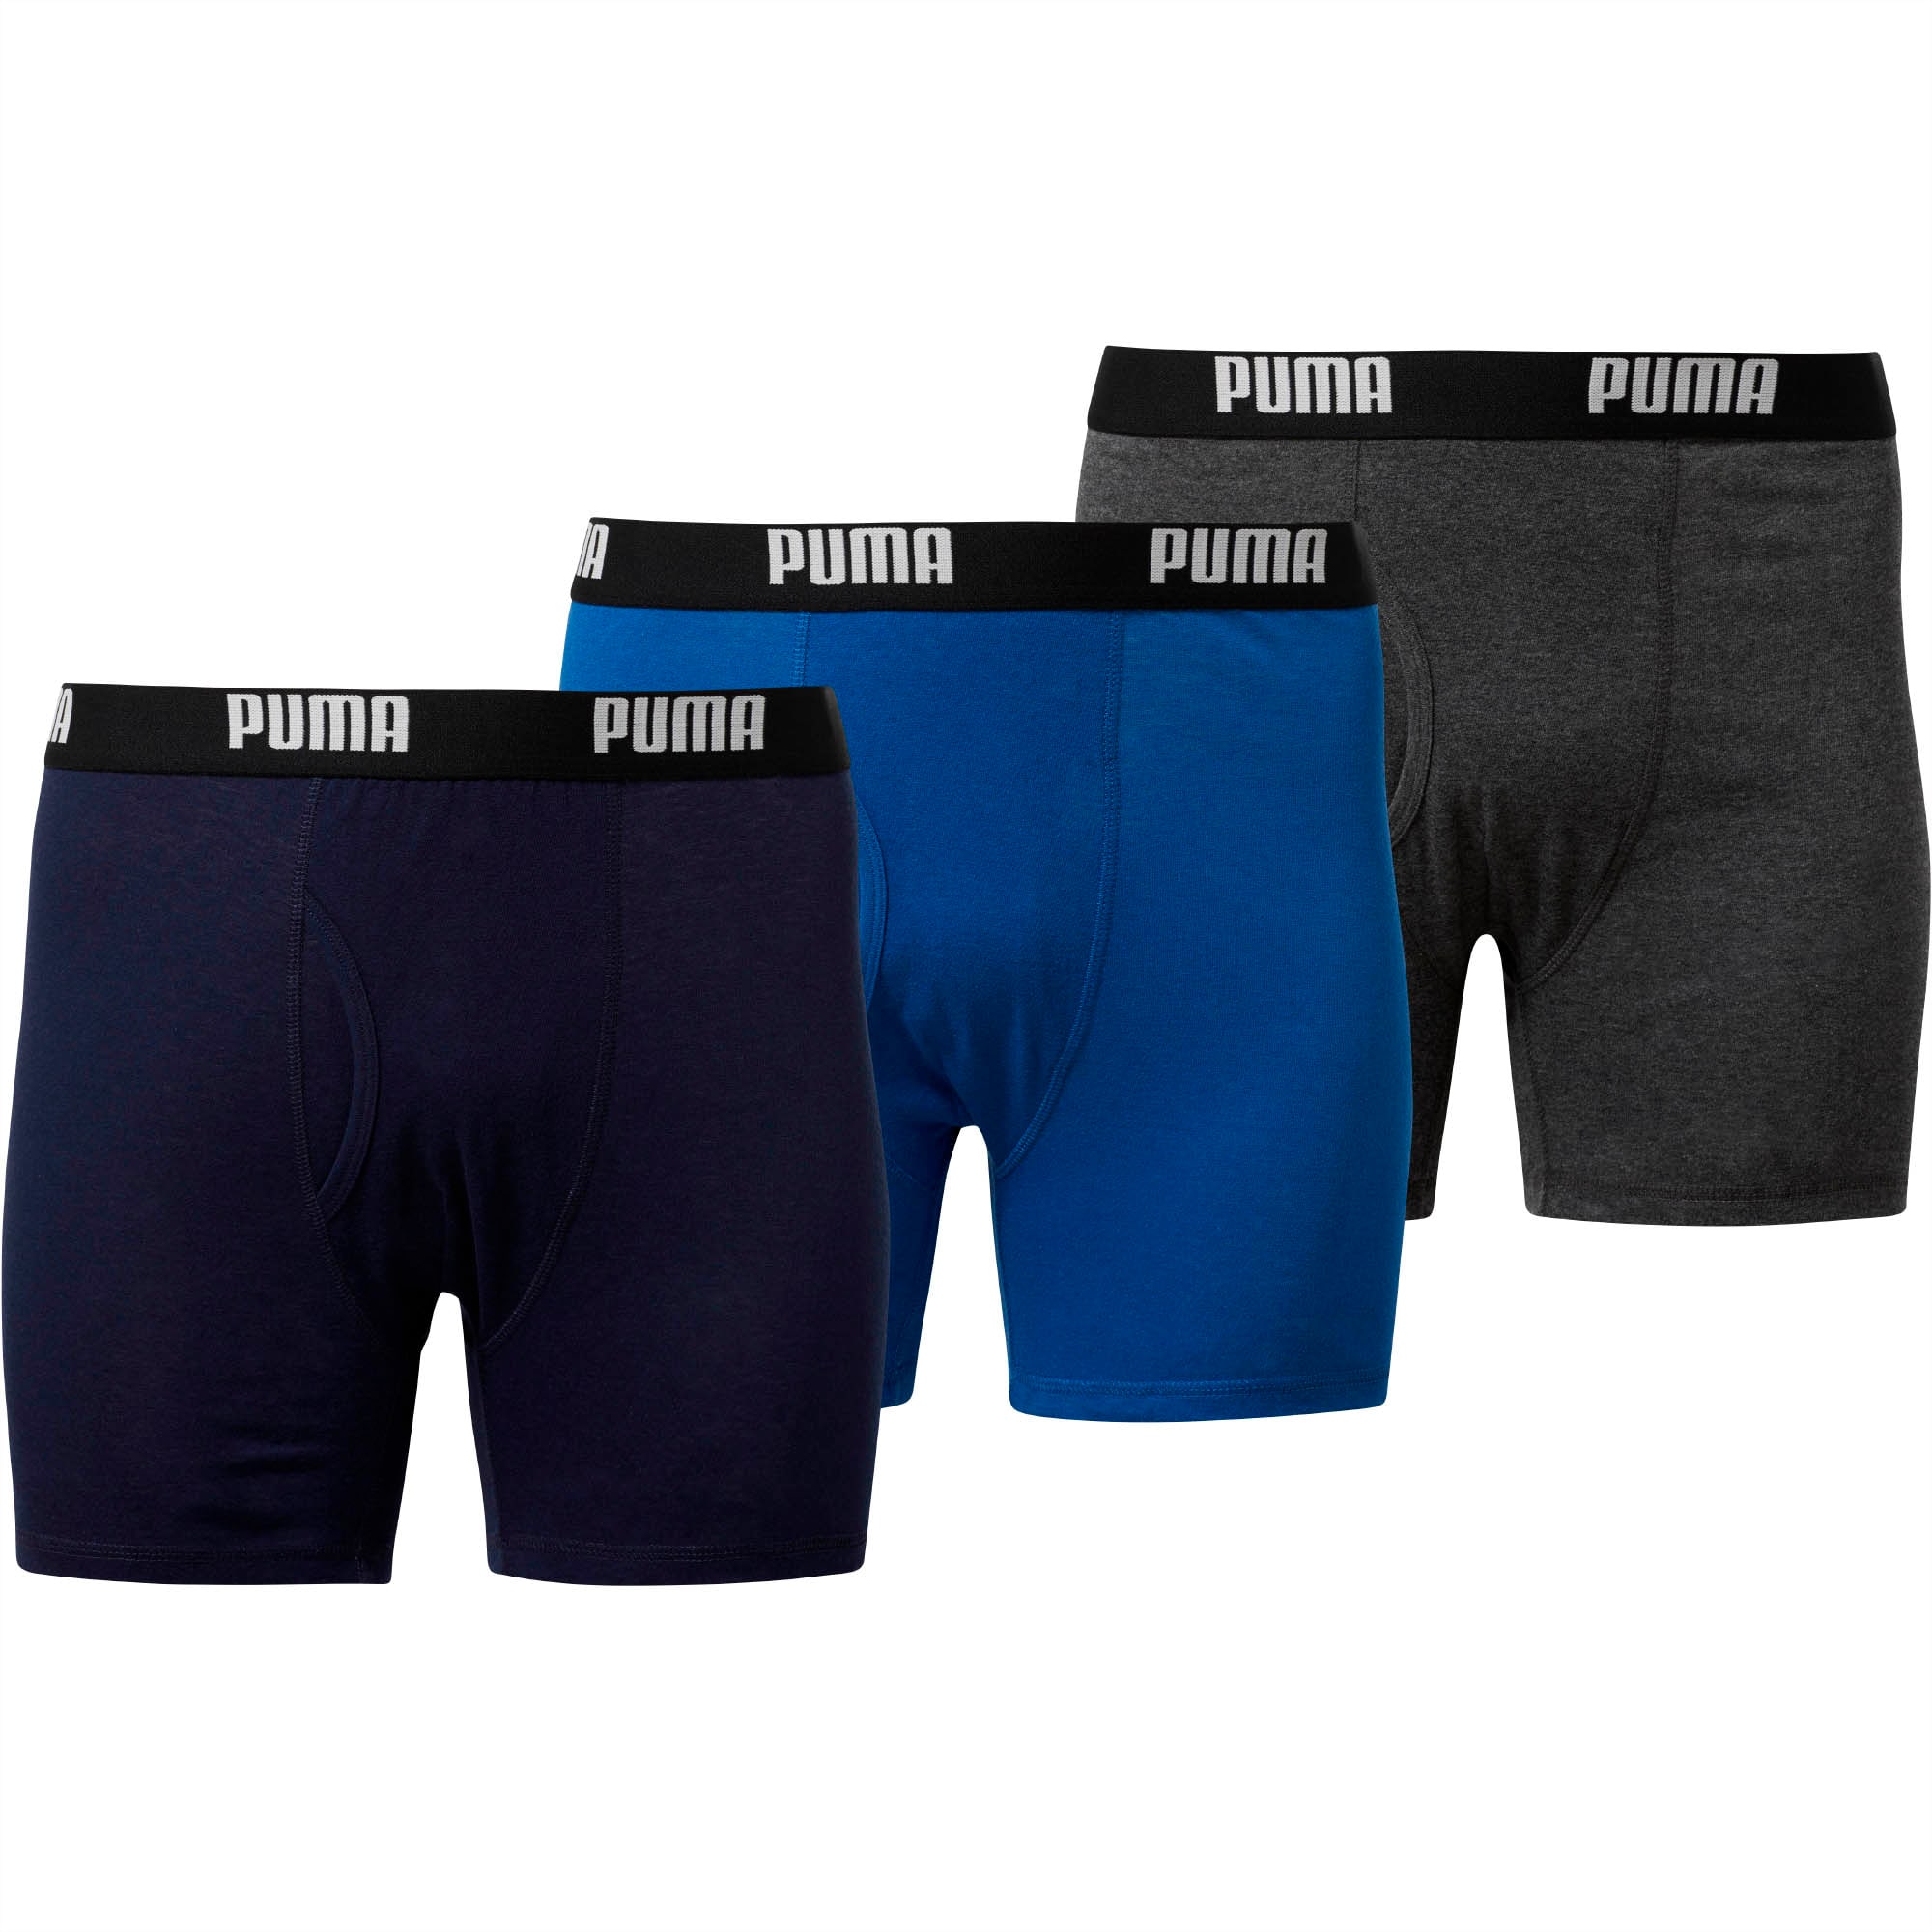 puma shorts pack of 3